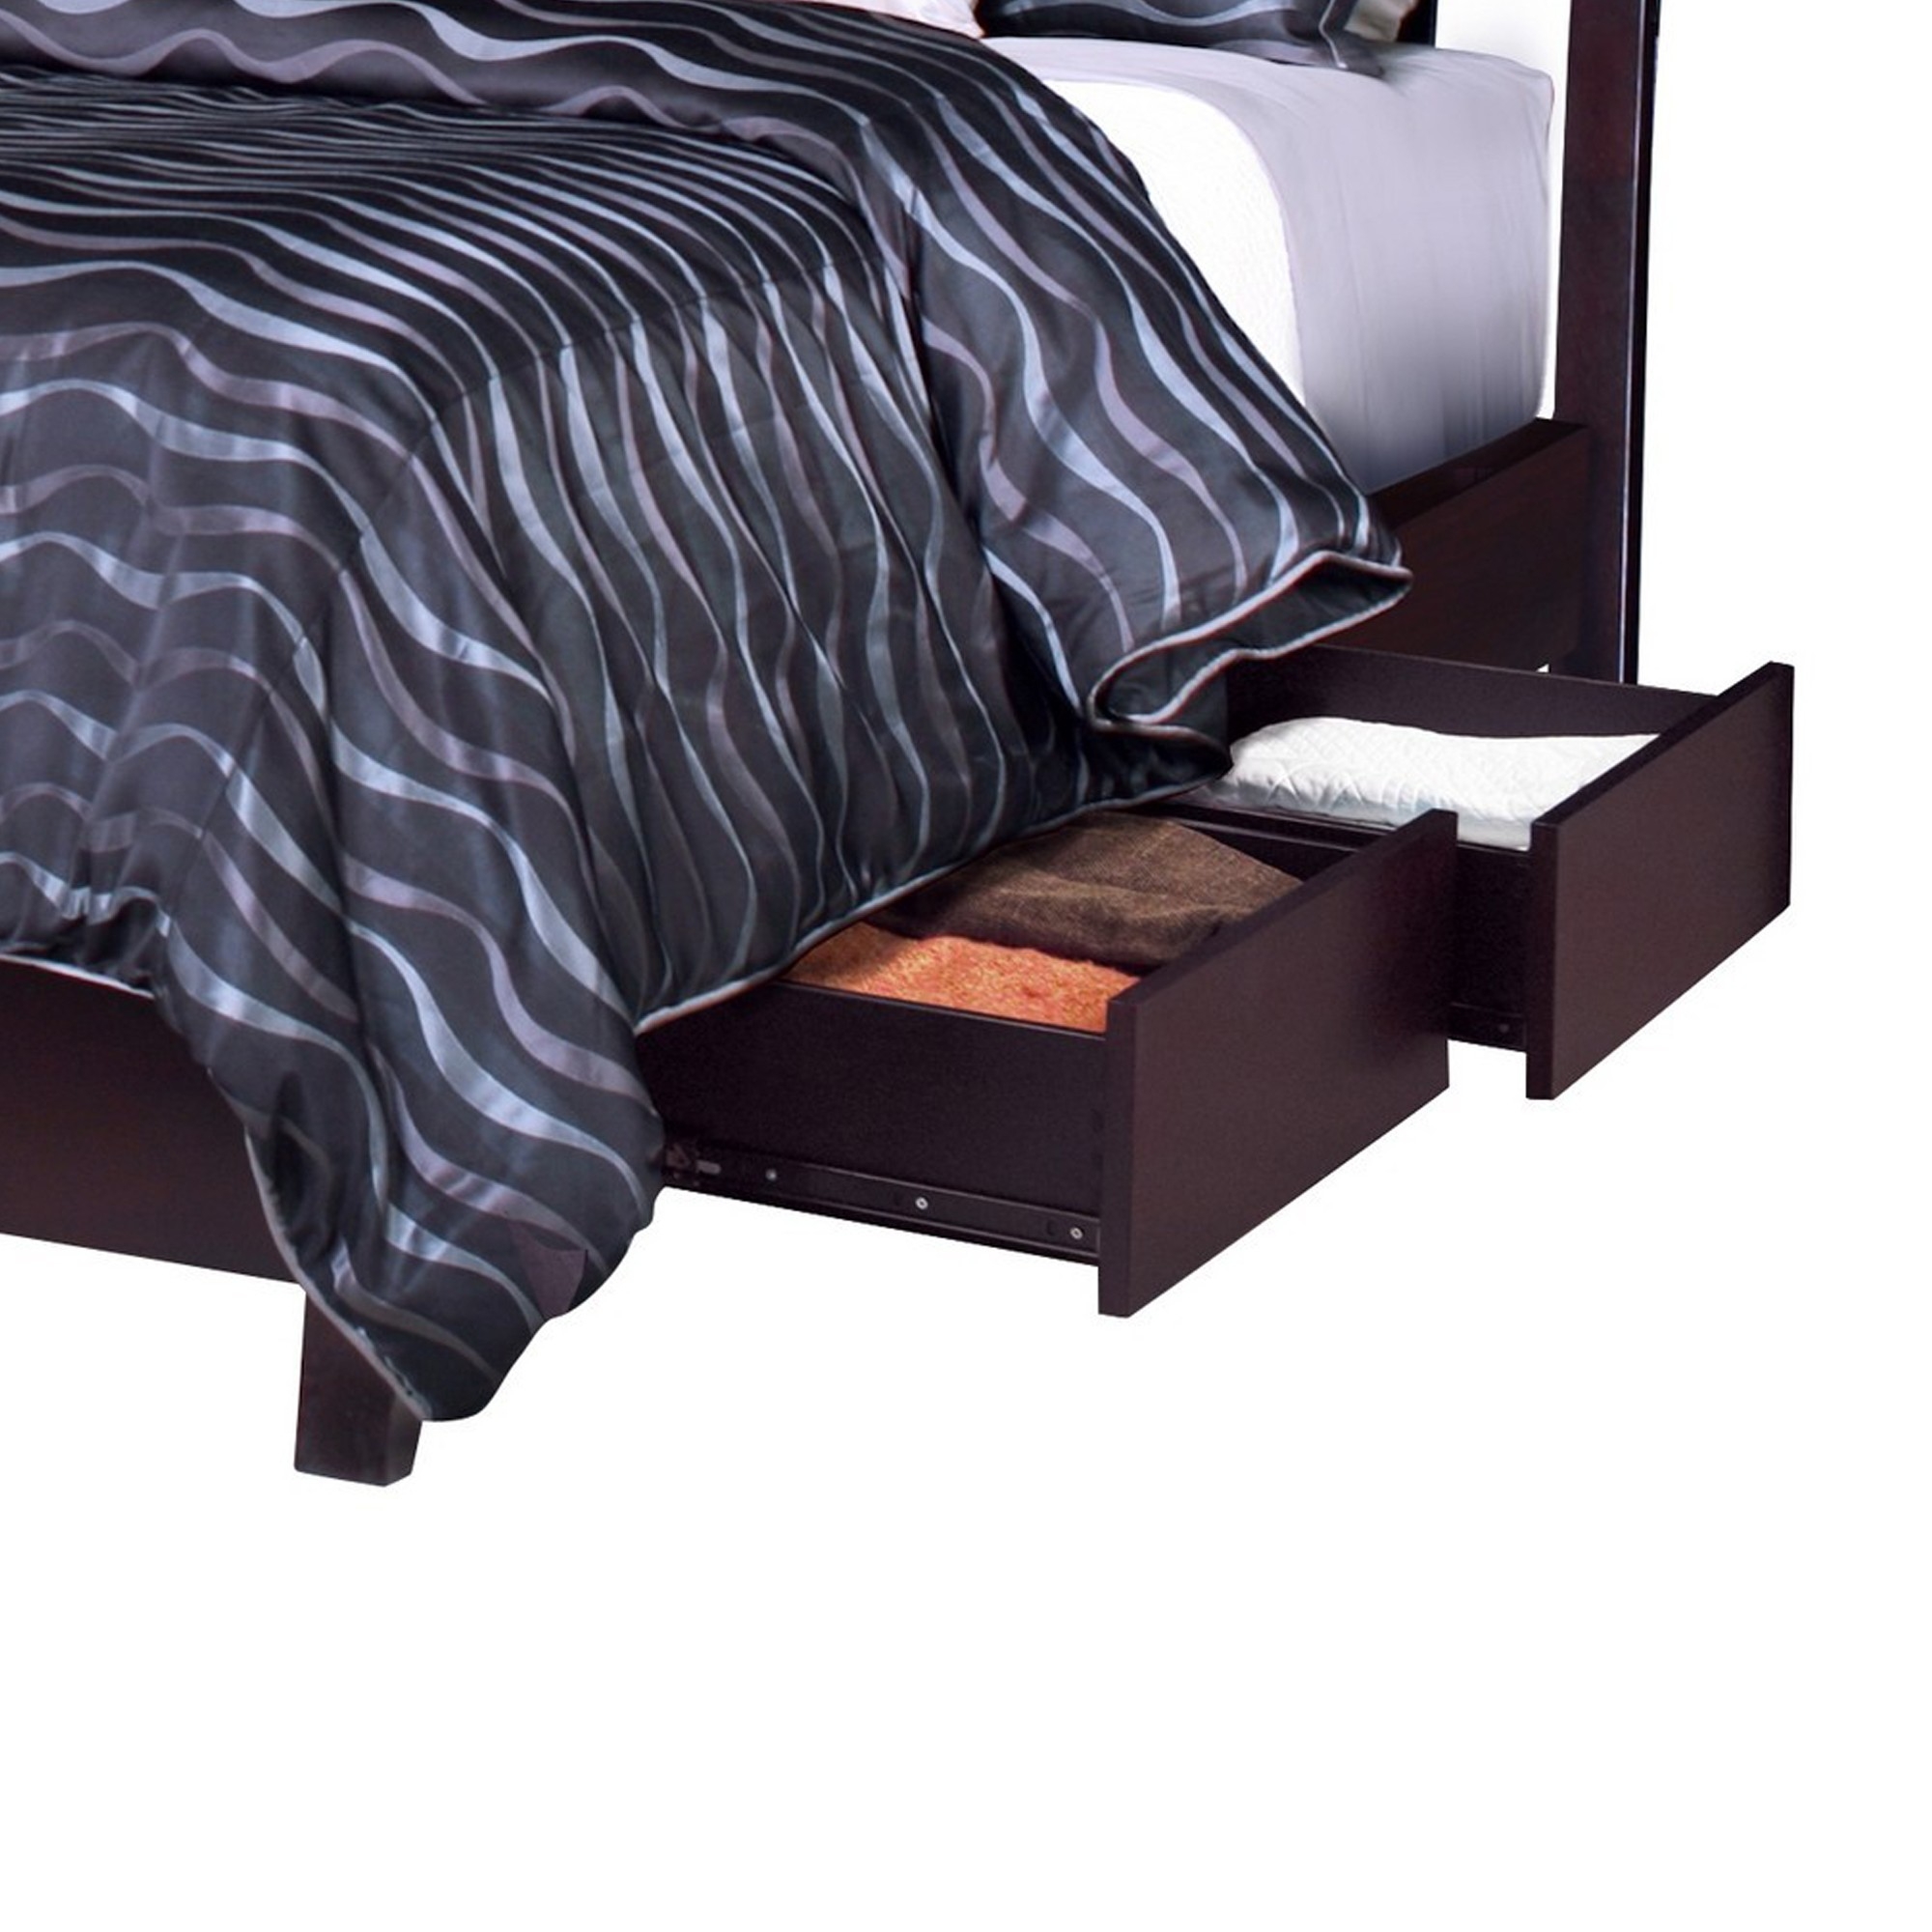 Fang Twin Storage Bed, 4 Drawers, Tropical Mahogany Wood, Espresso Brown- Saltoro Sherpi